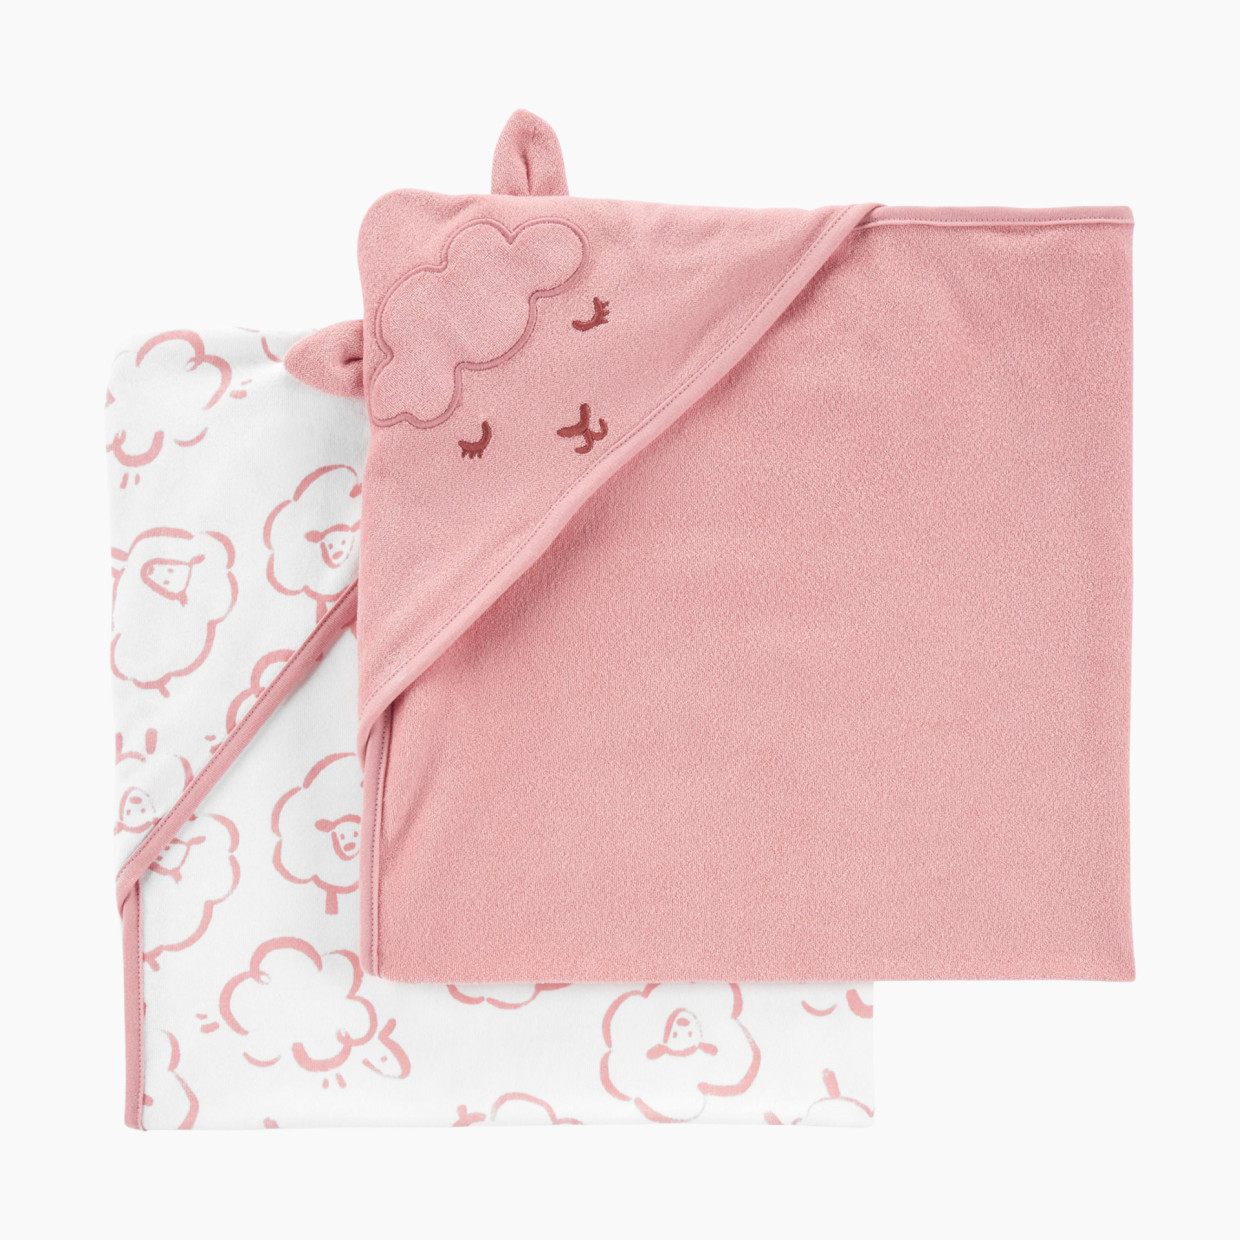 Carter's Hooded Towel (2 Pack) - Pink Lamb/Sheep, O/S.